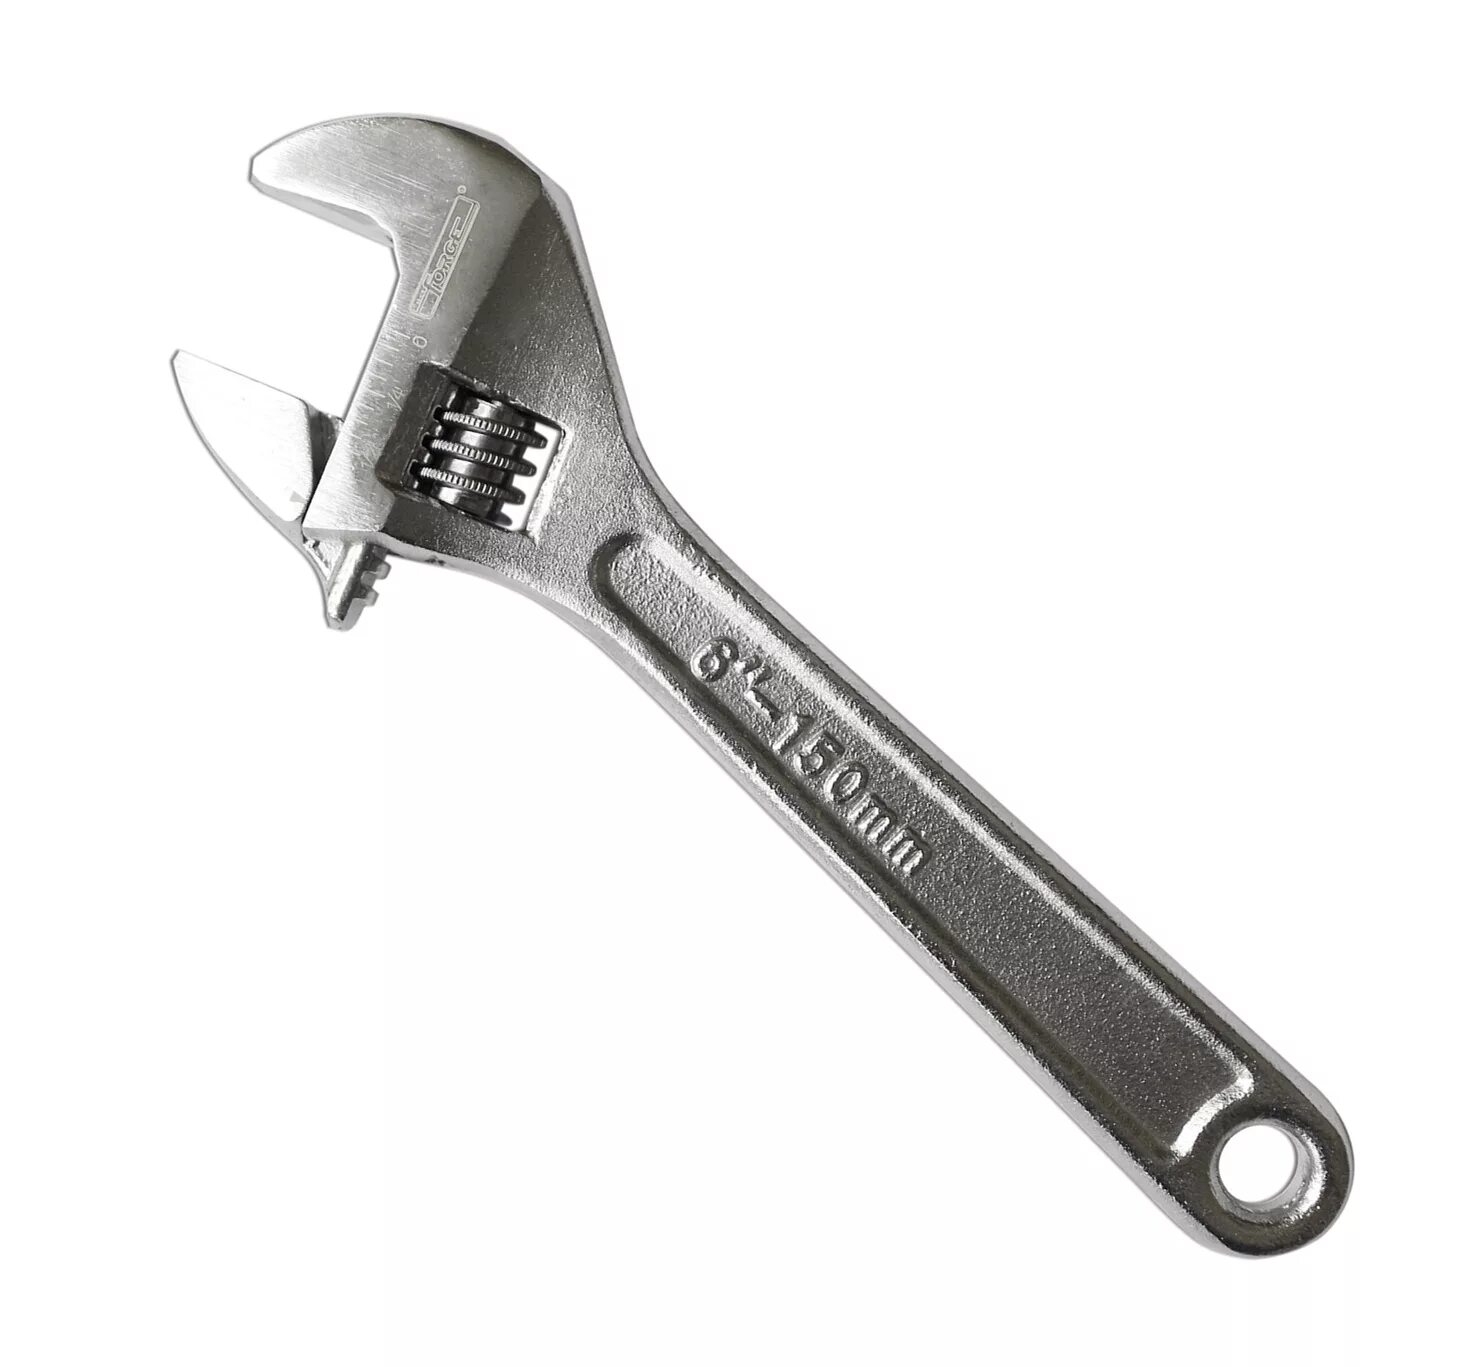 Wrench перевод. Ключ разводной 150мм 6inch Spark Lux. Ключ разводной 150мм/6" Bohrer mostek(сталь 45). Ключ гаечный разводной5505008. Ключ гаечный разводной изолированный (AWI-H-250).